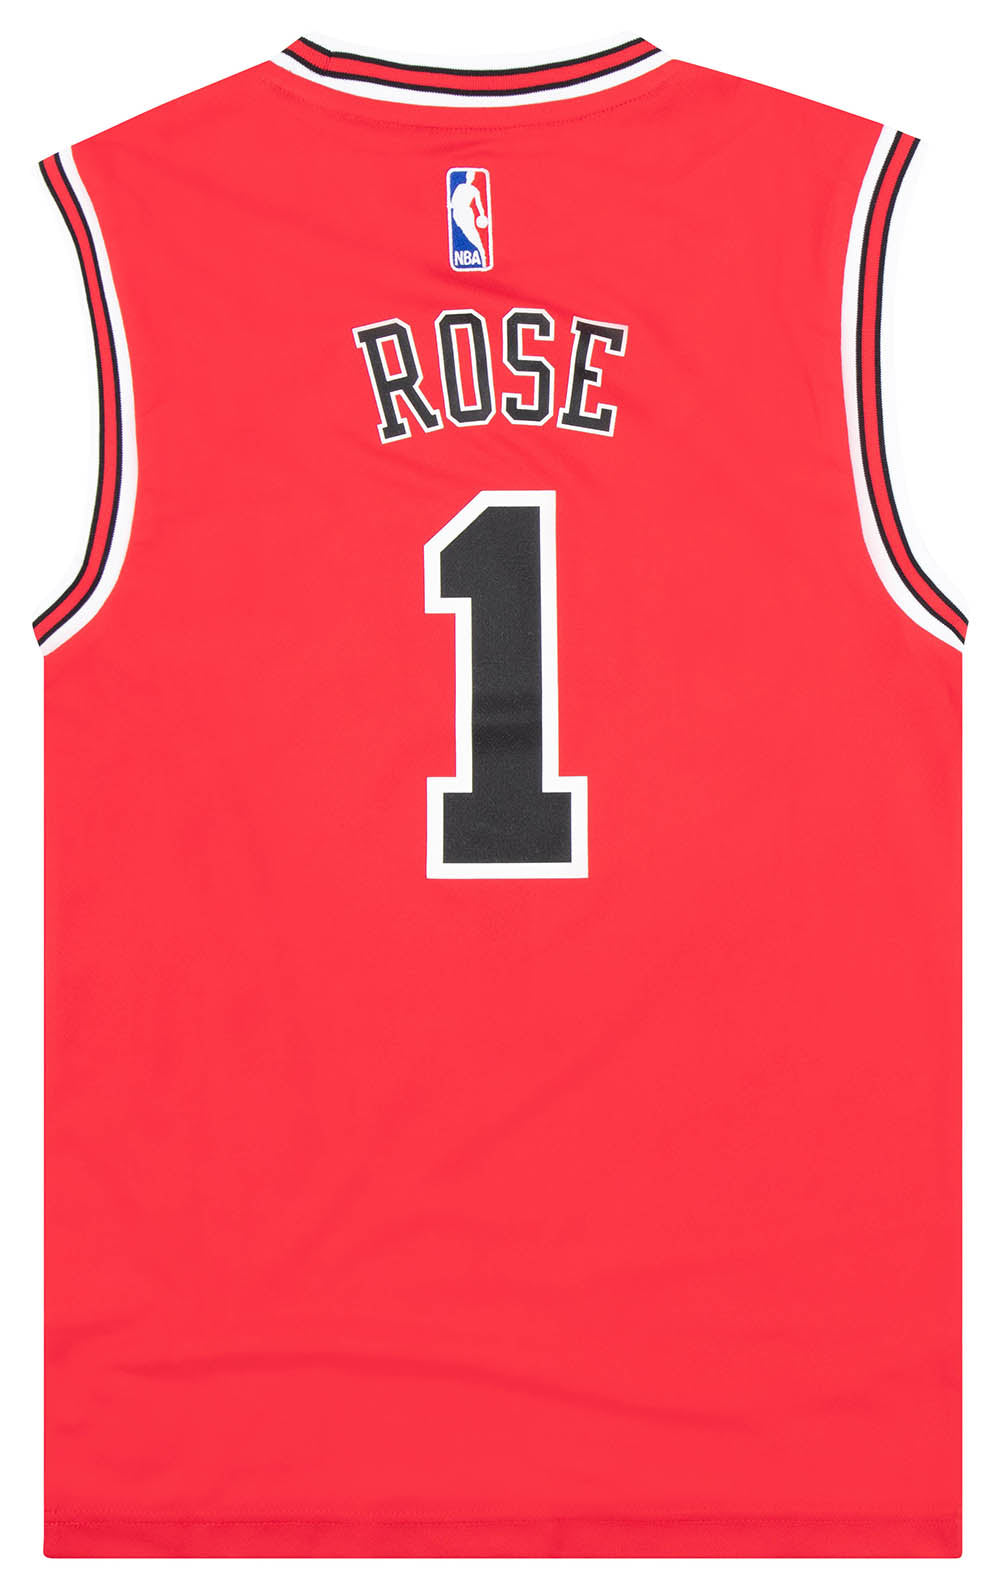 2014-16 CHICAGO BULLS ROSE #1 ADIDAS JERSEY (AWAY) XS - W/TAGS